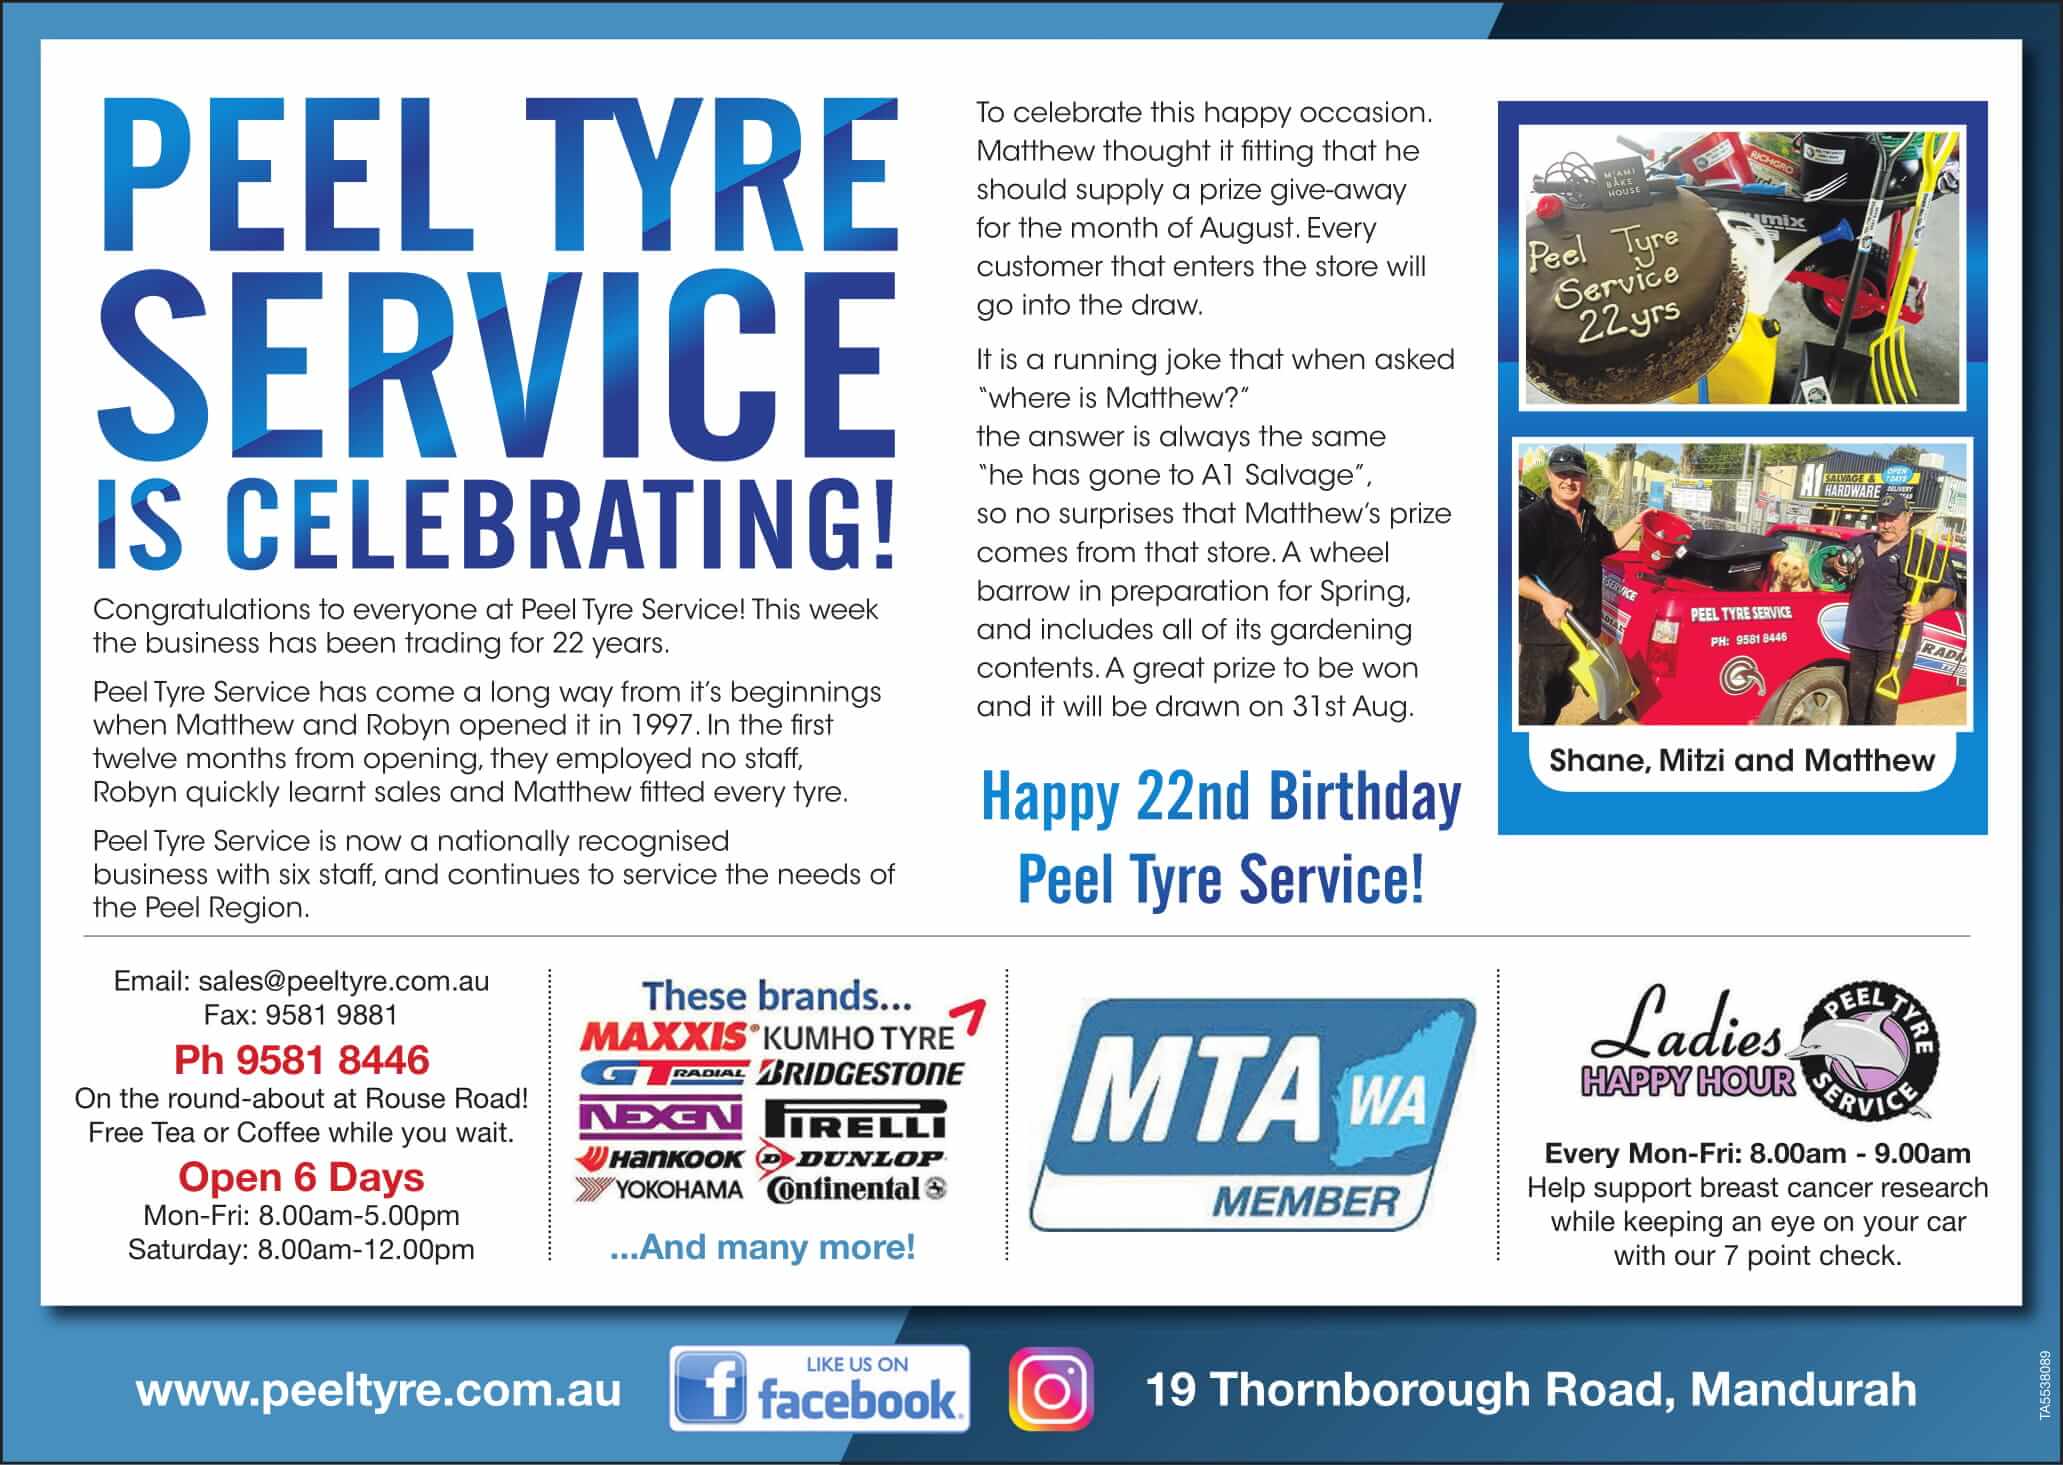 Peel Tyre Service is celebrating!